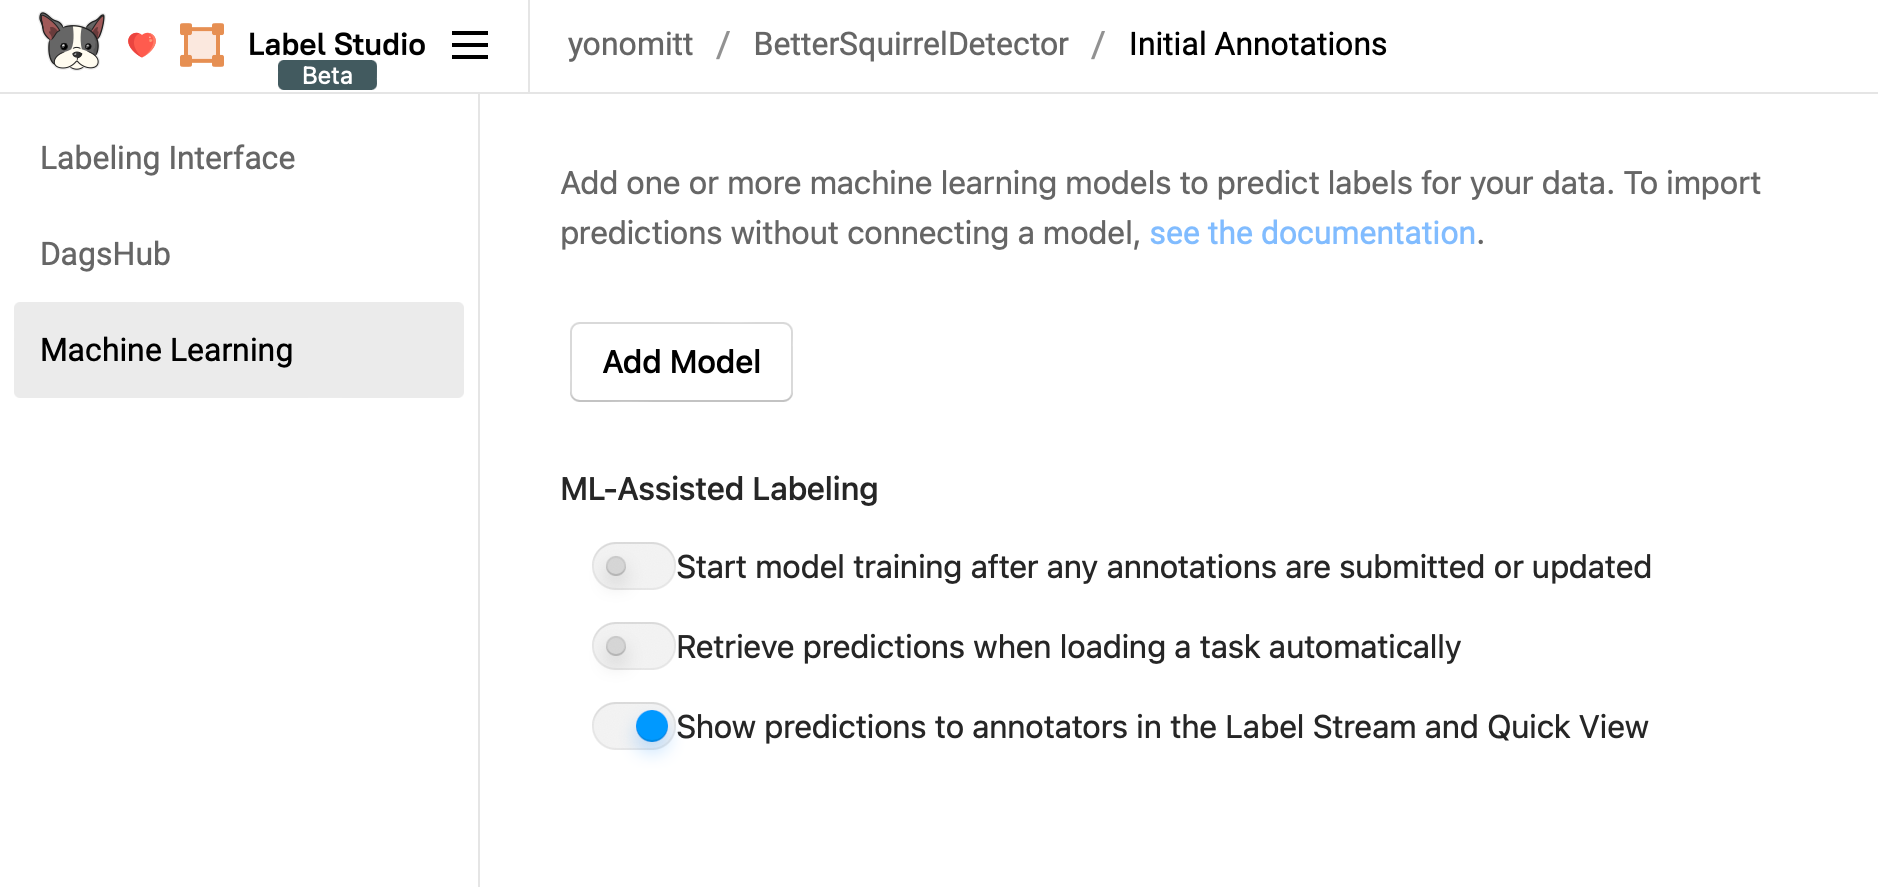 Screenshot of the Machine Learning Settings in Label Studio on DagsHub.com